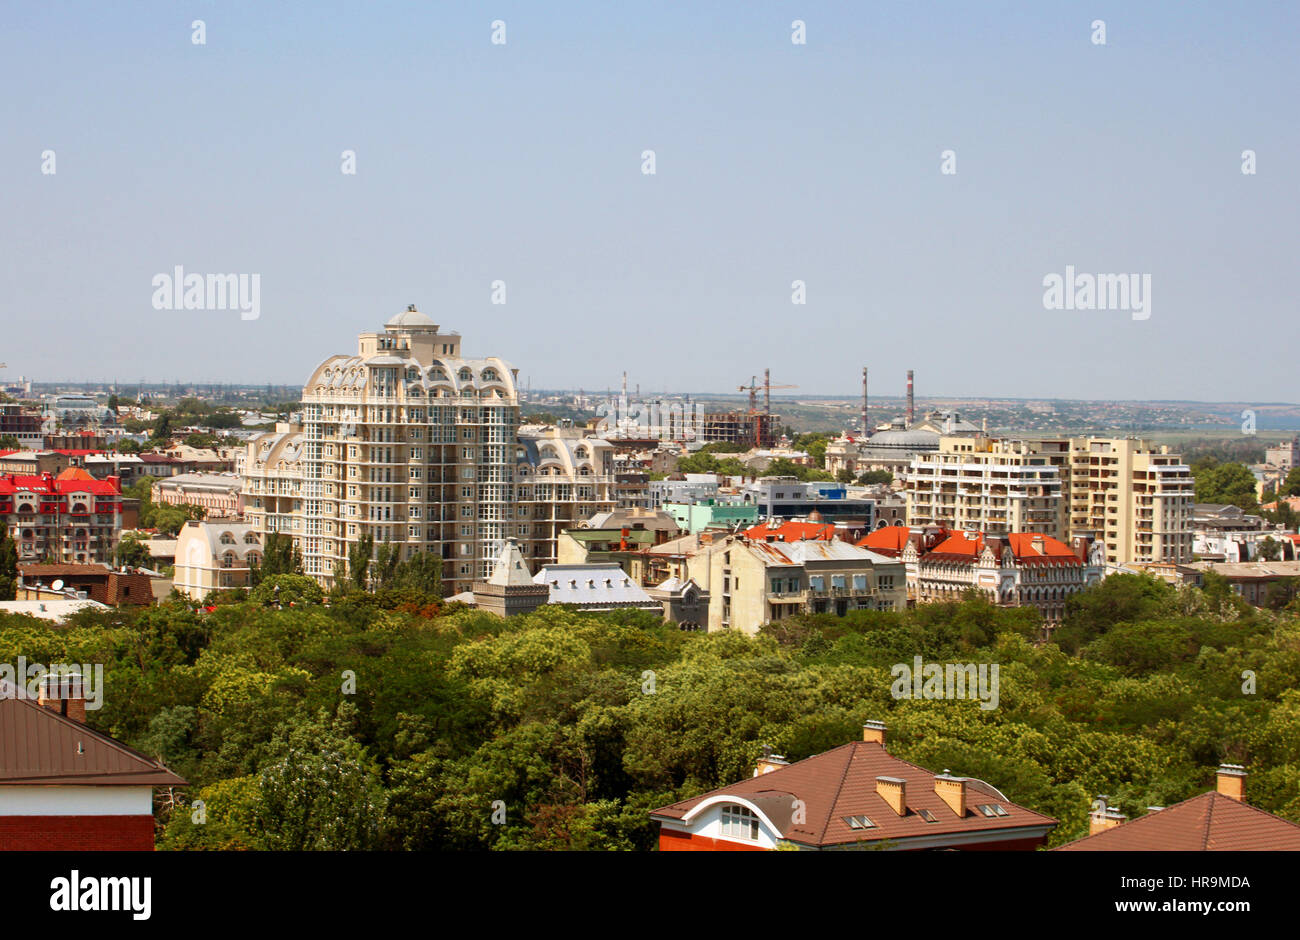 Nice view of Odesa, port city in Ukraine Stock Photo